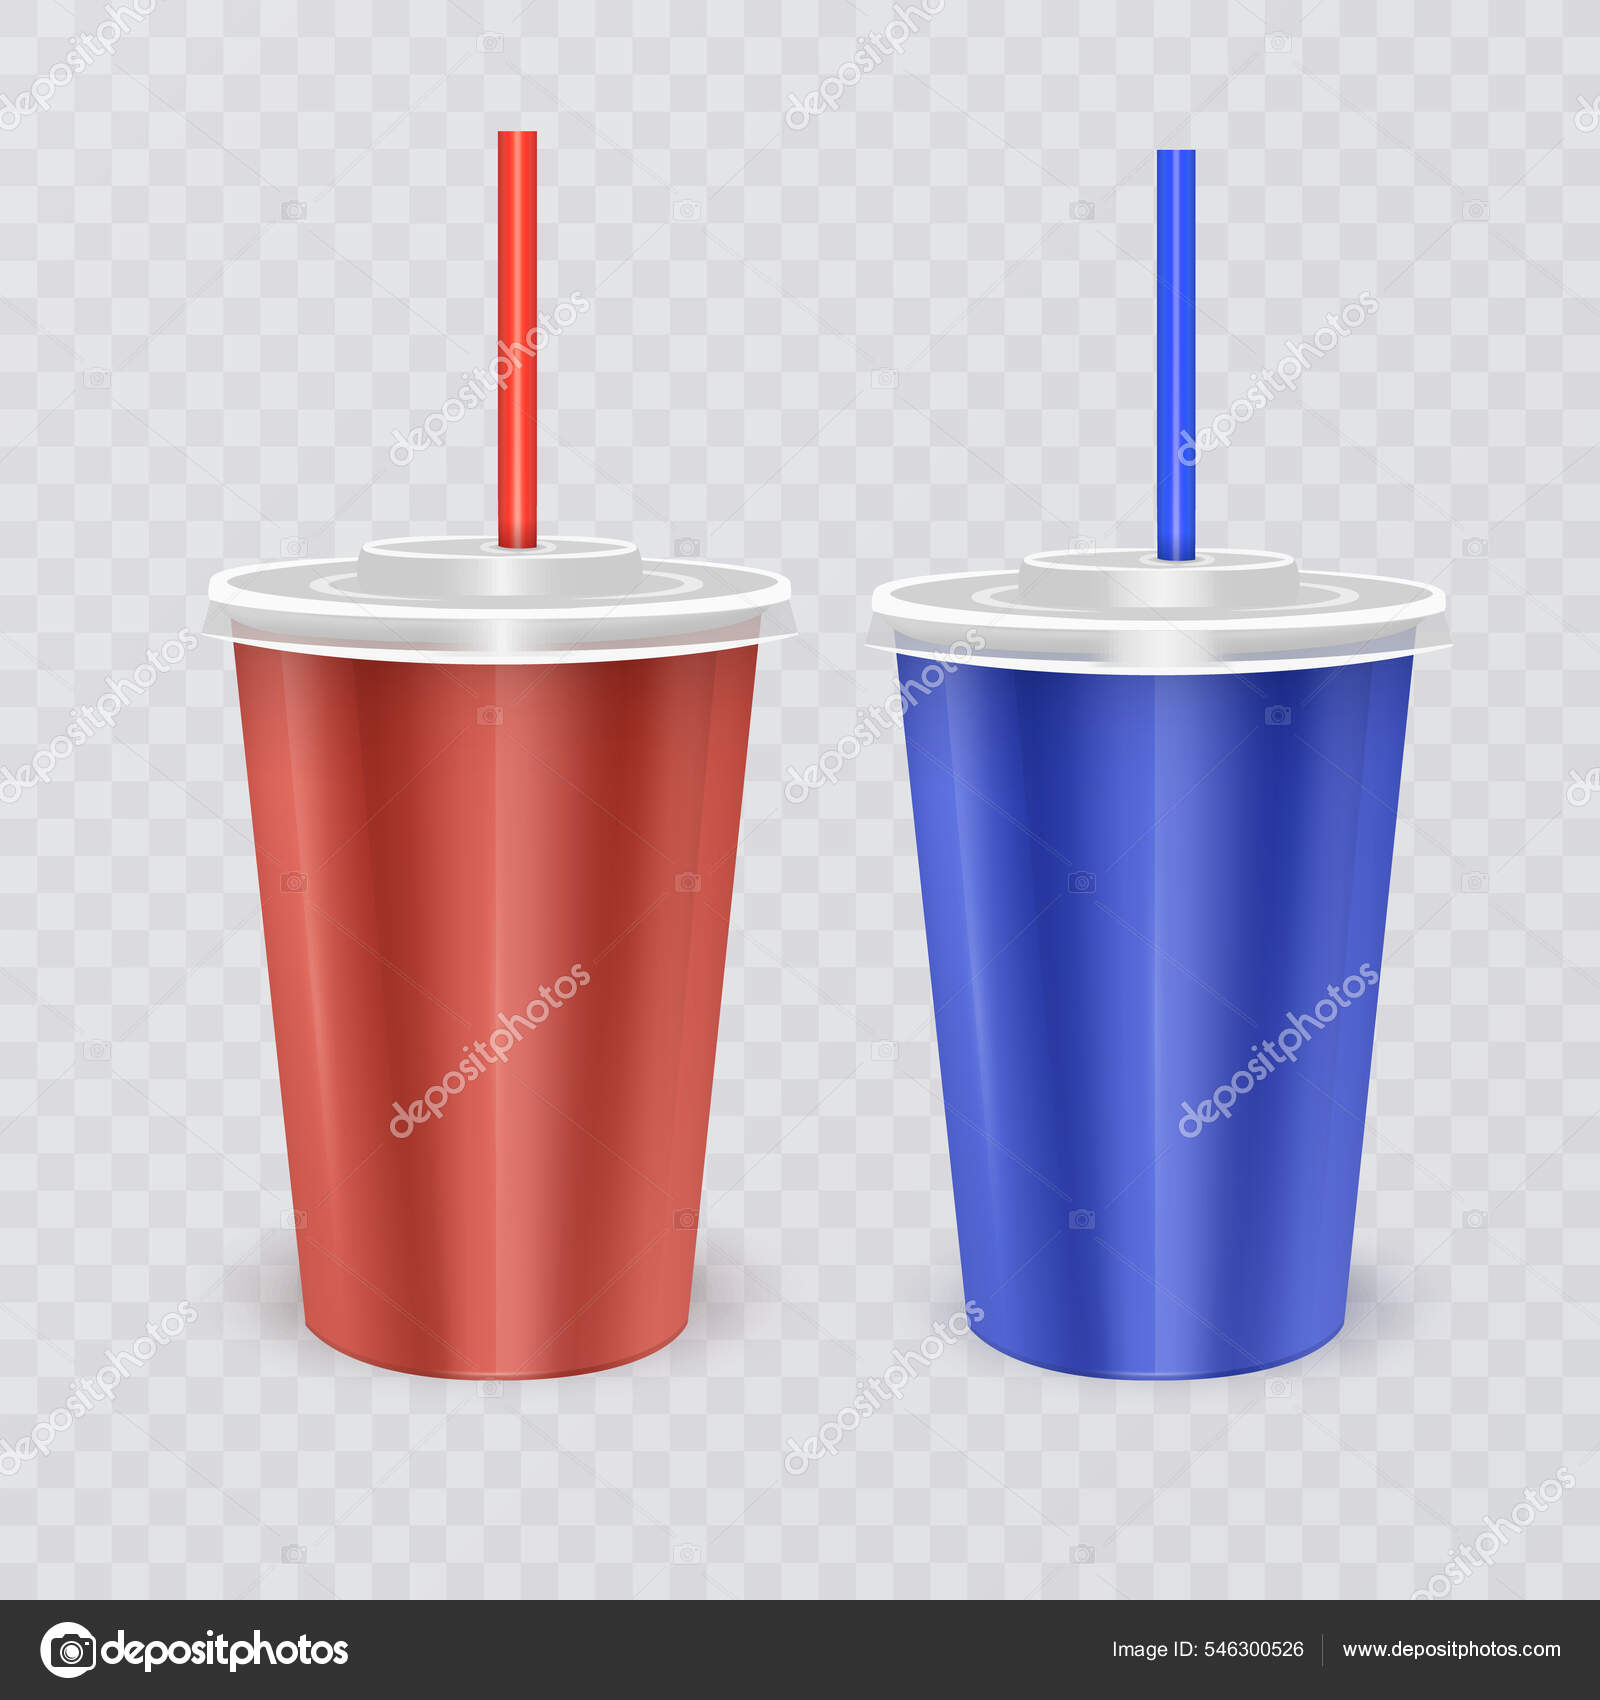 https://st.depositphotos.com/13904216/54630/v/1600/depositphotos_546300526-stock-illustration-paper-disposable-cup-lid-drinking.jpg